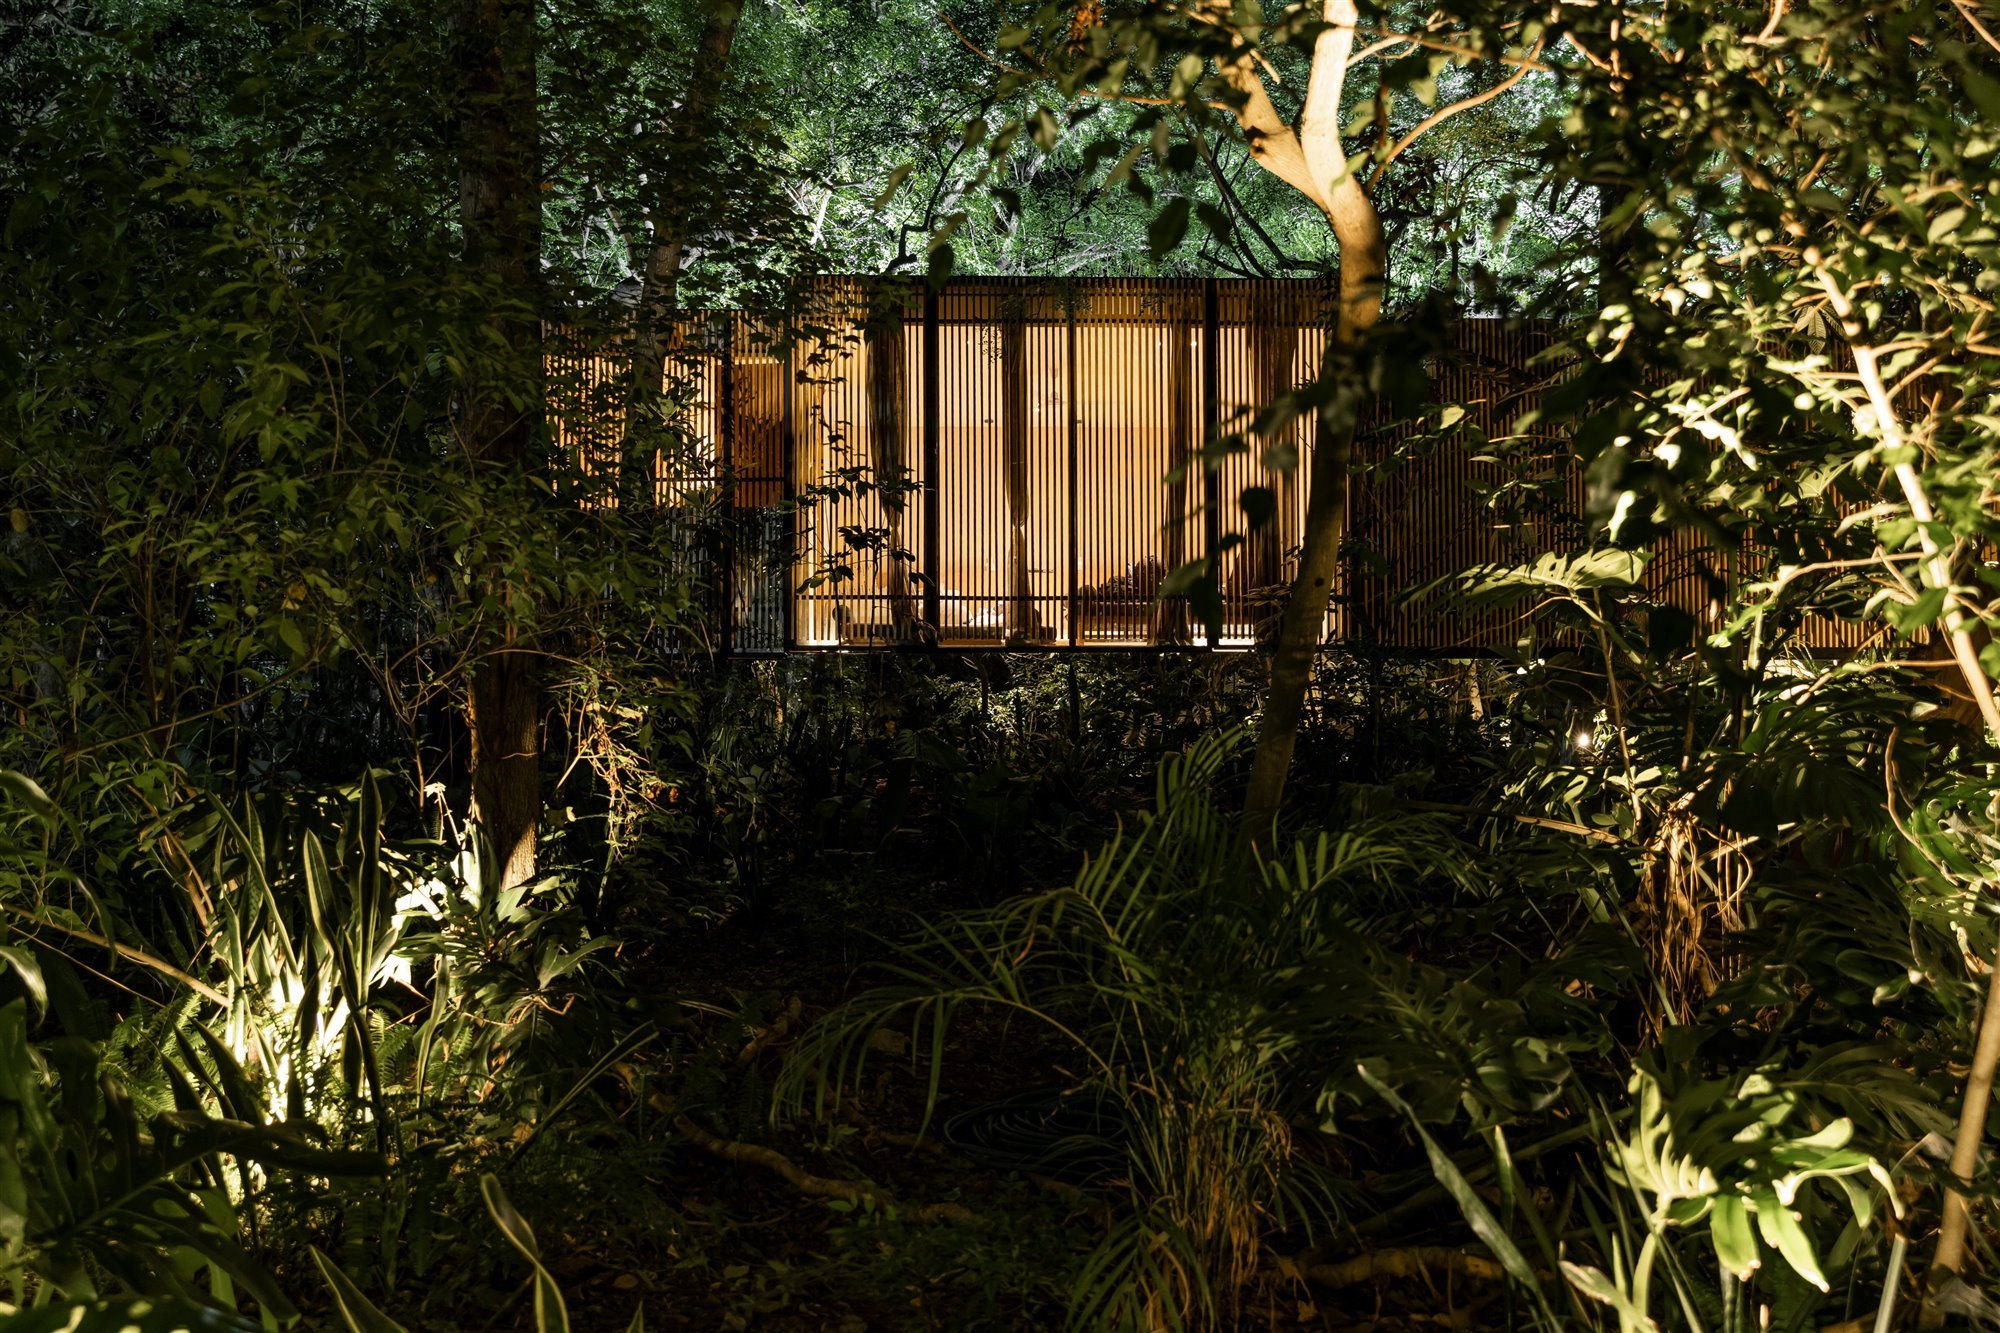 Casa moderna en Mexico rodeada de vegetacion en la selva vista de noche